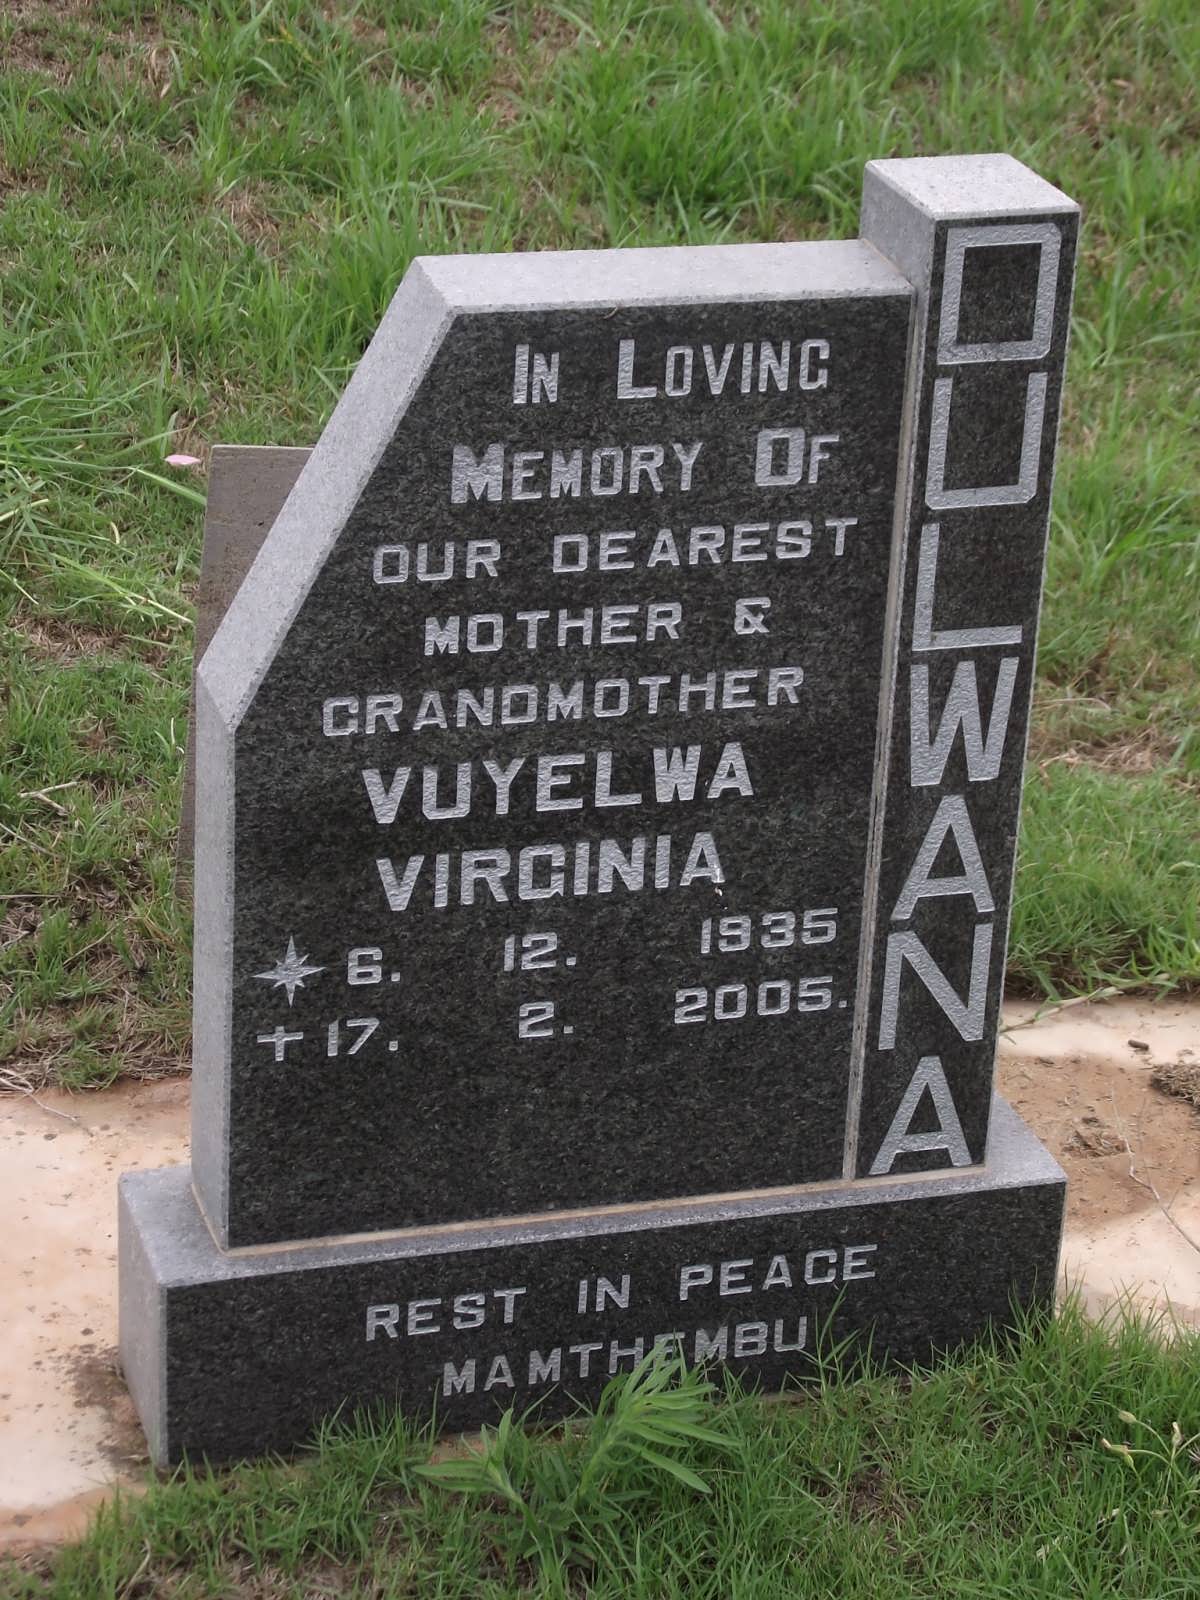 DULWANA Vuyelwa Virginia 1935-2005